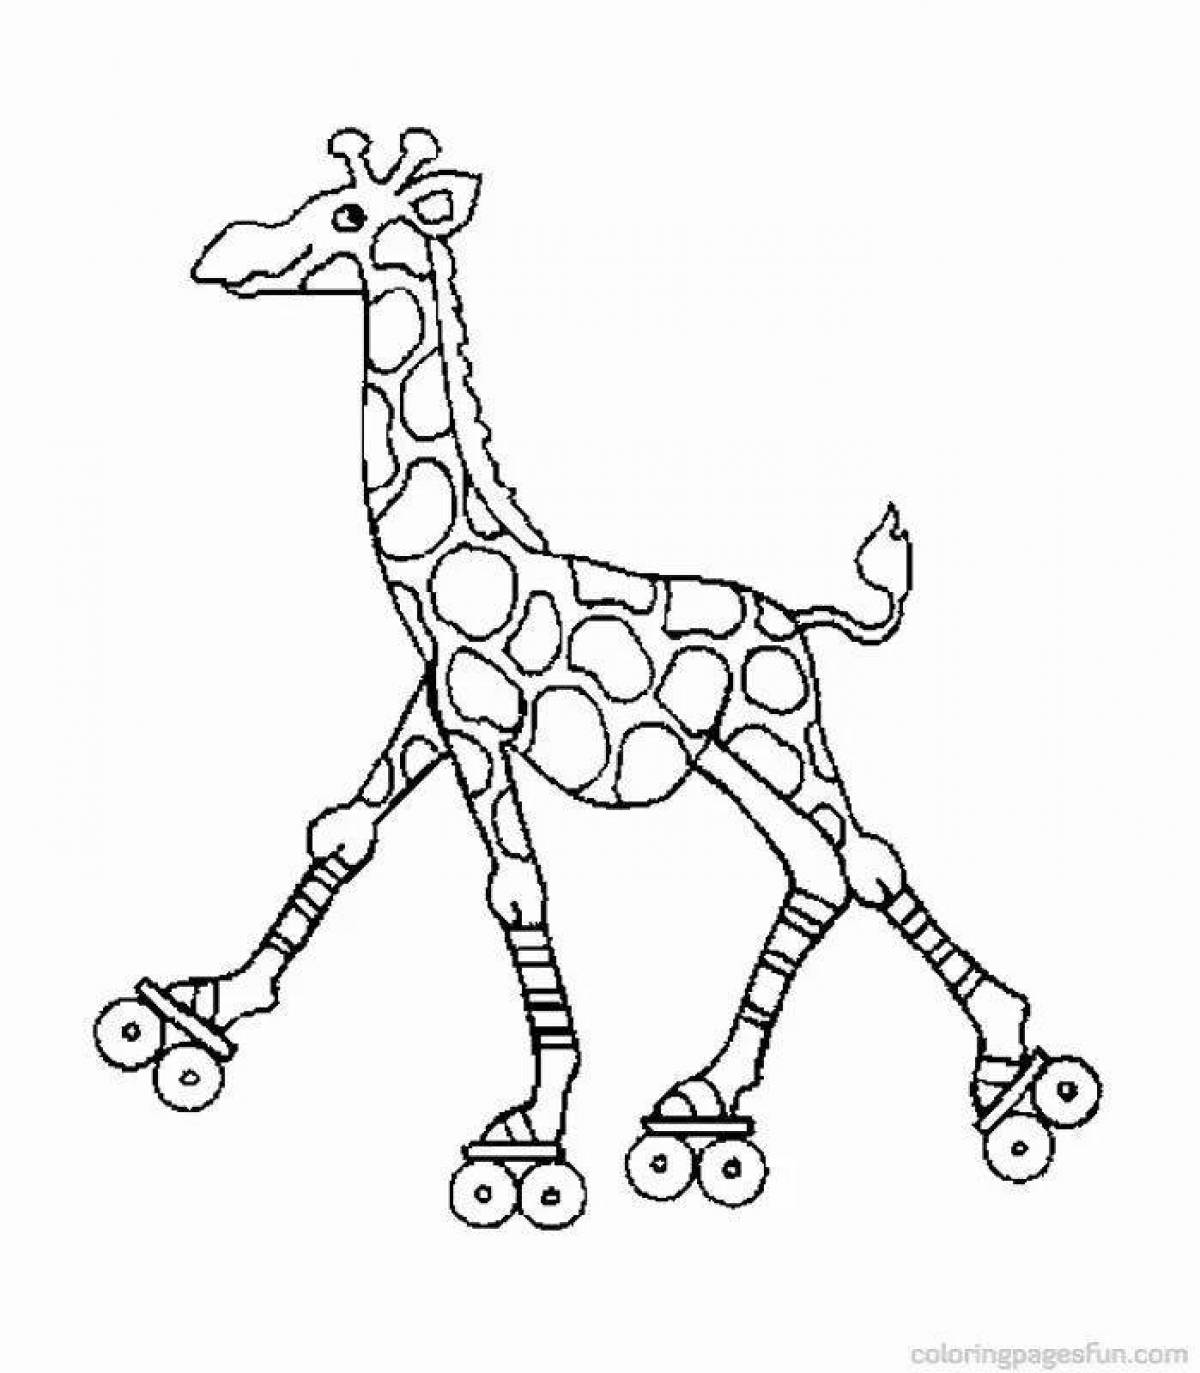 Glamorous giraffe coloring book for kids